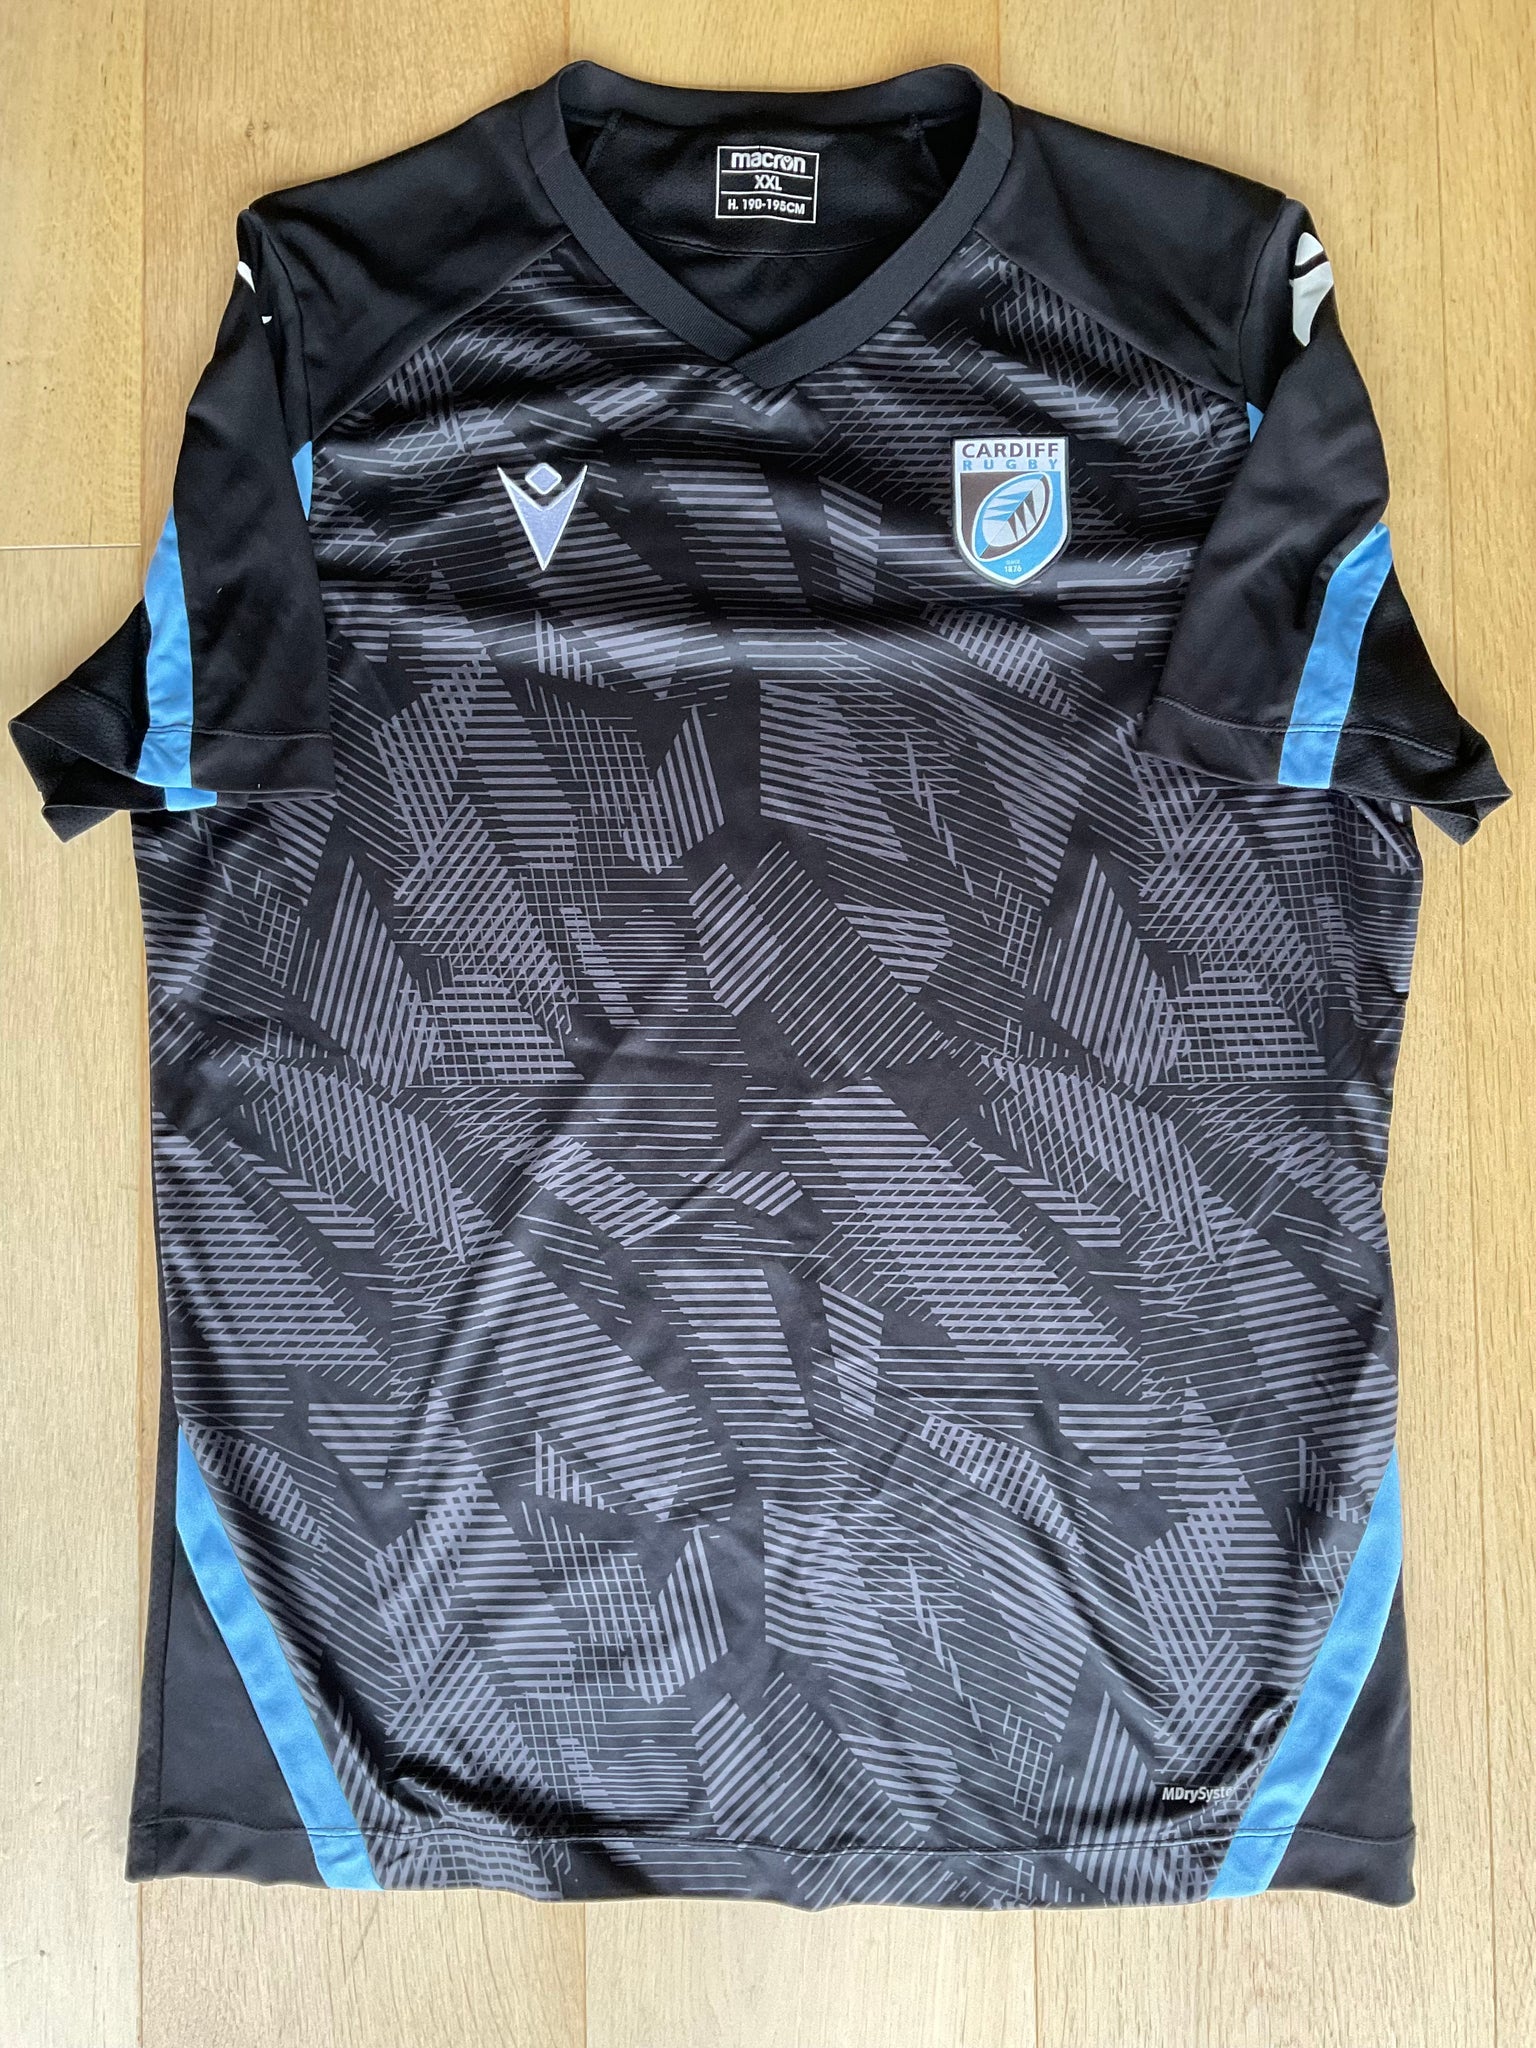 Thomas Young - Cardiff Rugby Gym T-Shirt [Black, Grey & Blue]